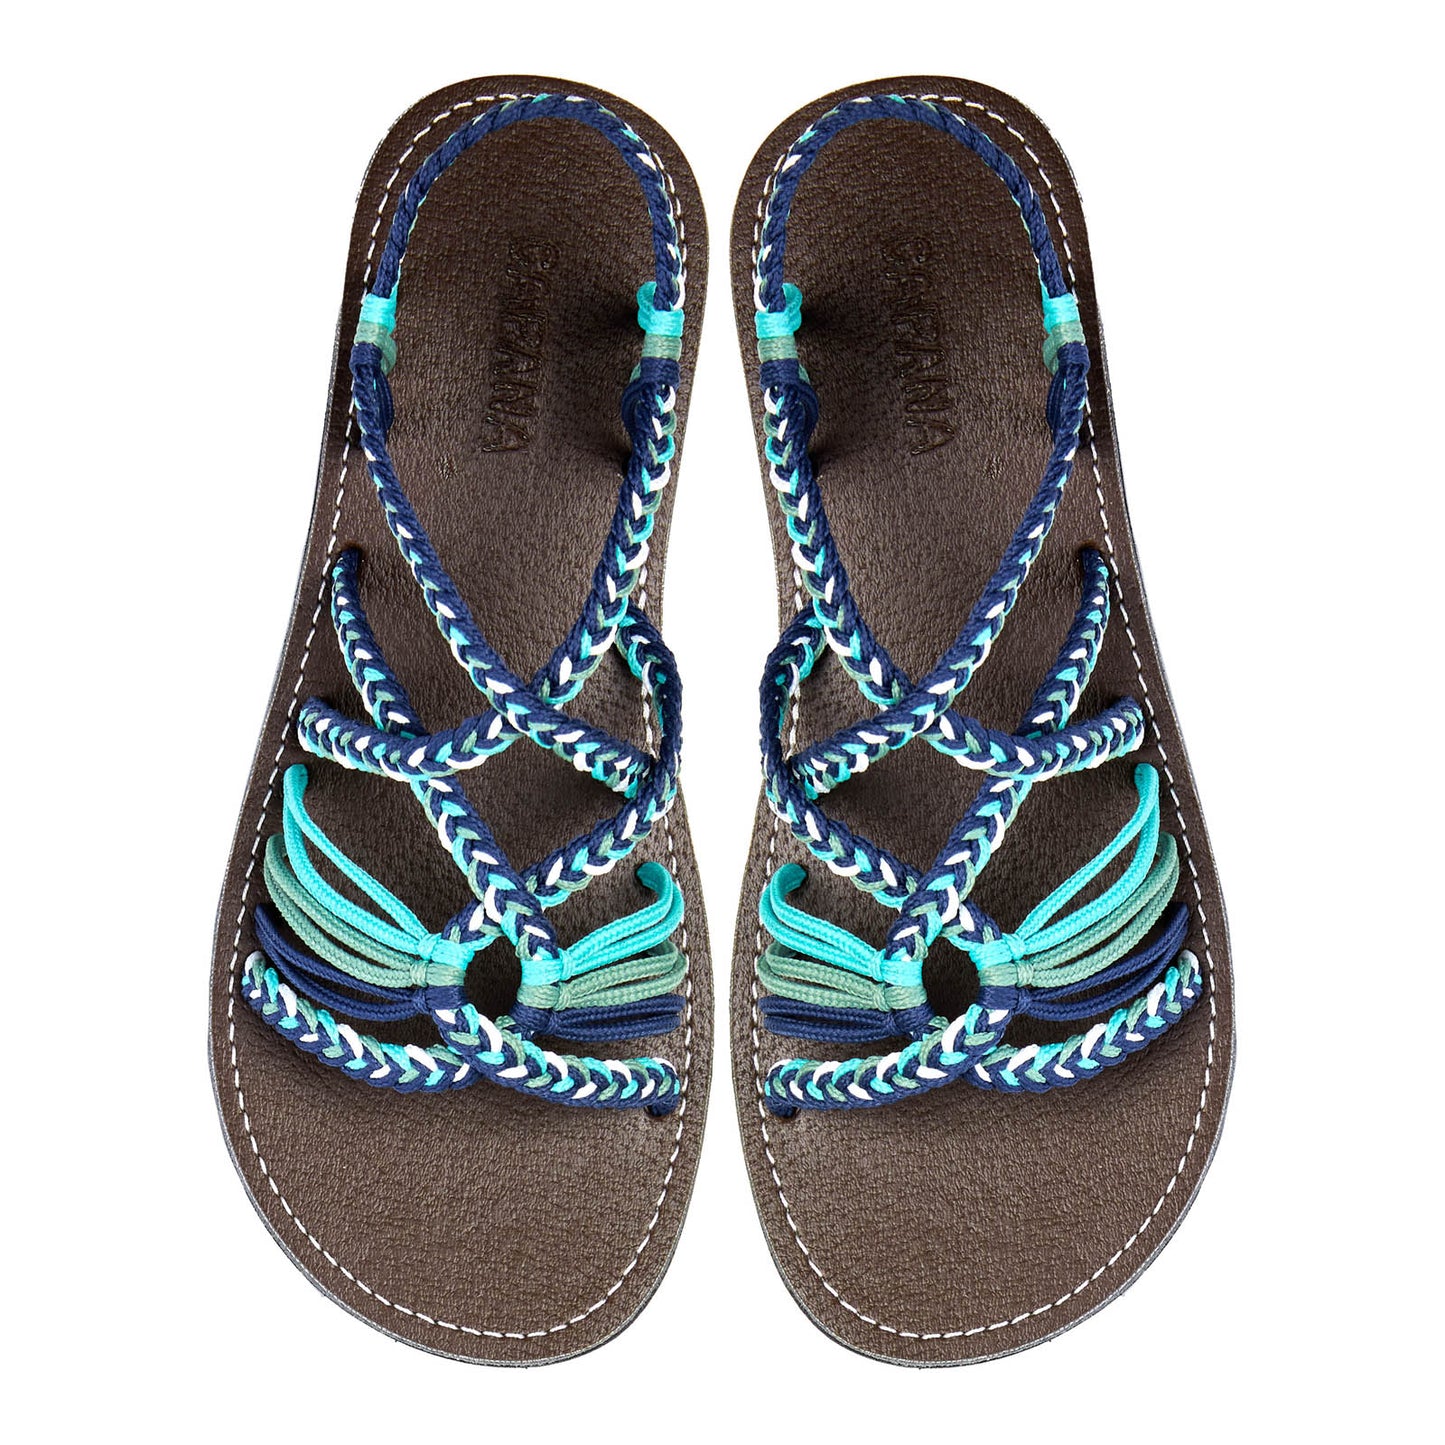 Relax Marine Pistachio Rope Sandals Blue Green Open toe wider design Flat Handmade sandals for women